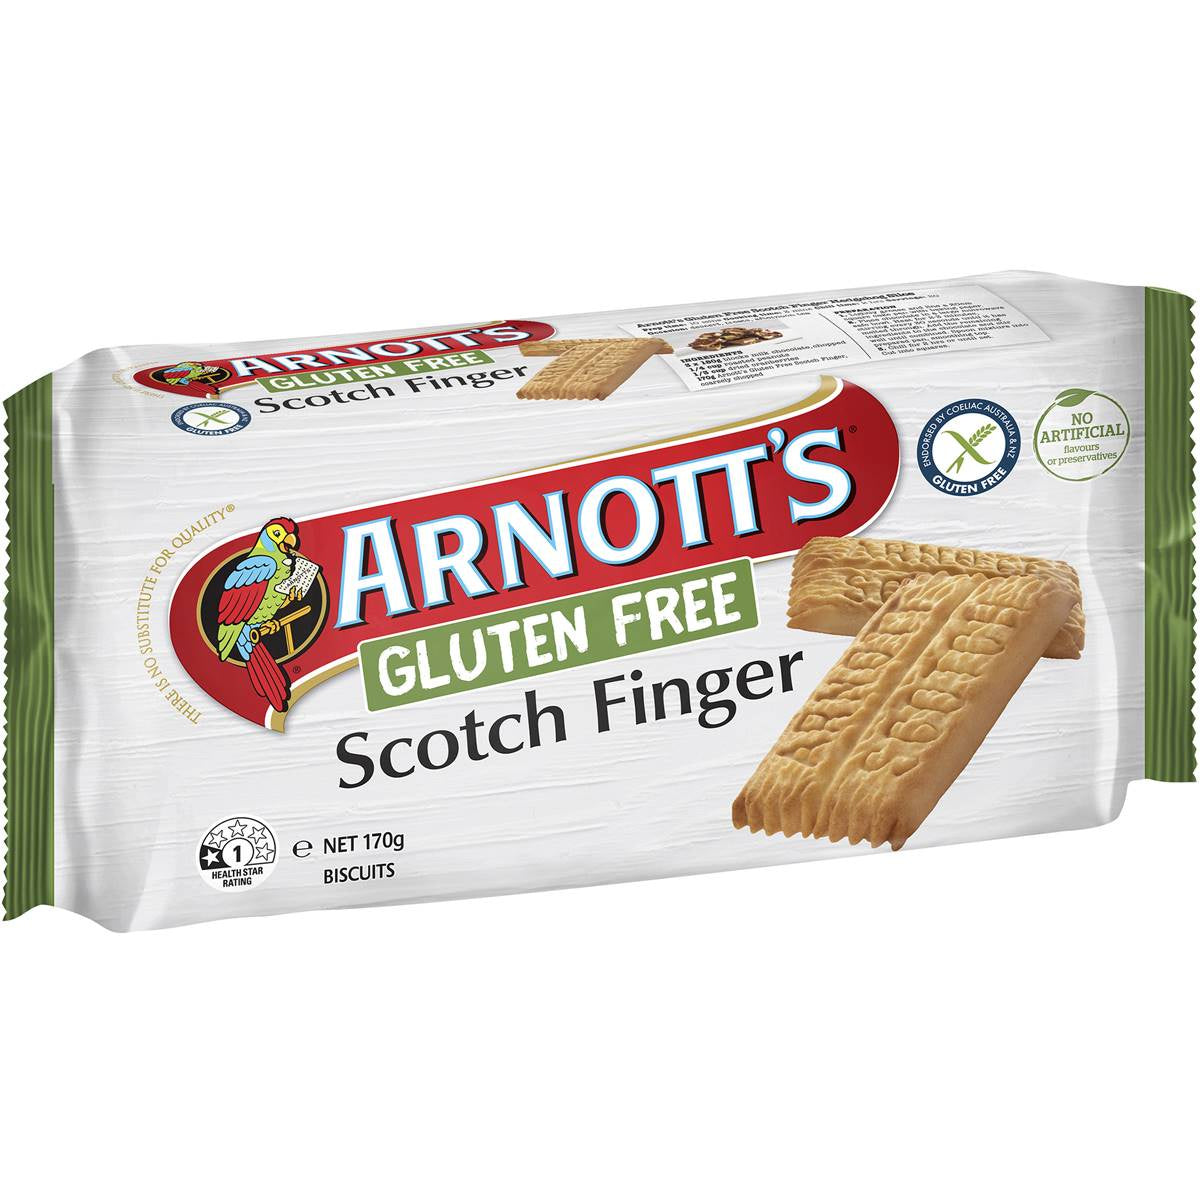 Arnotts Scotch Finger GF 170g